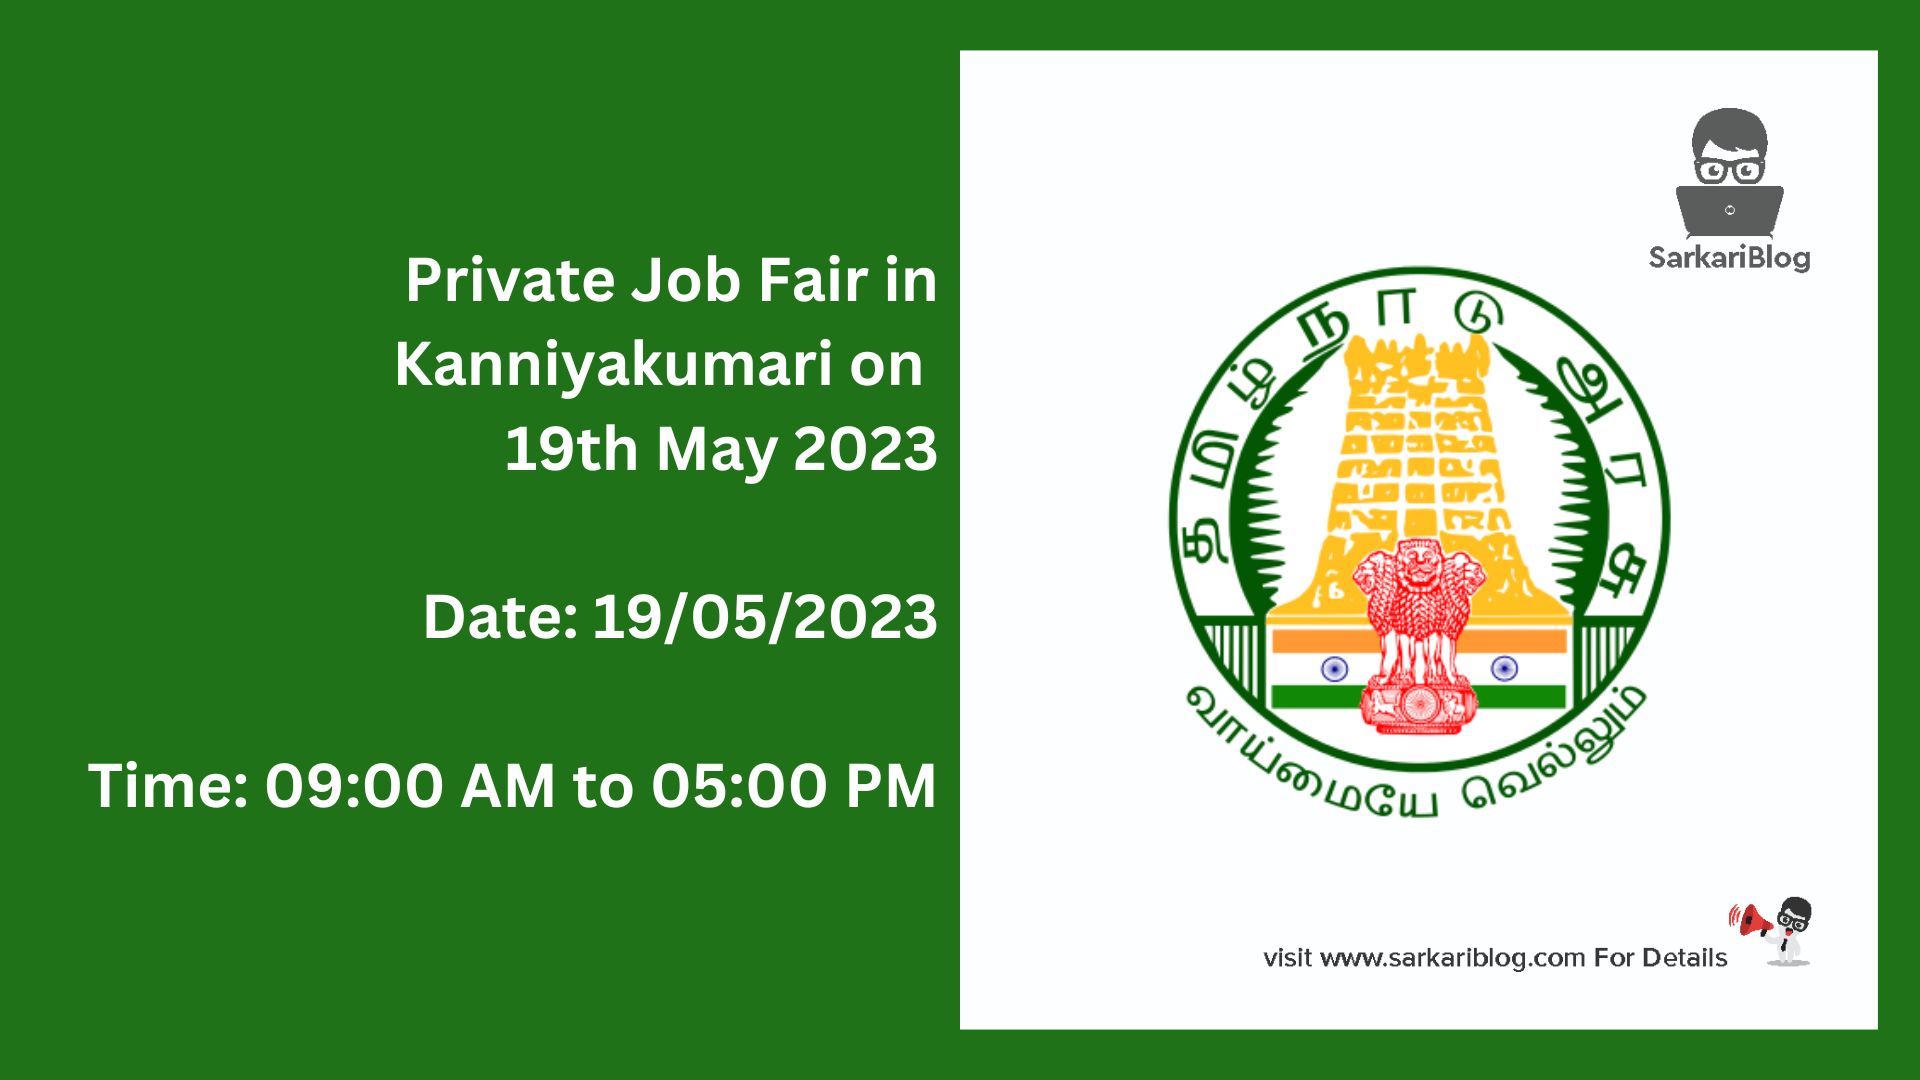 Private Job Fair in Kanniyakumari on 19th May 2023